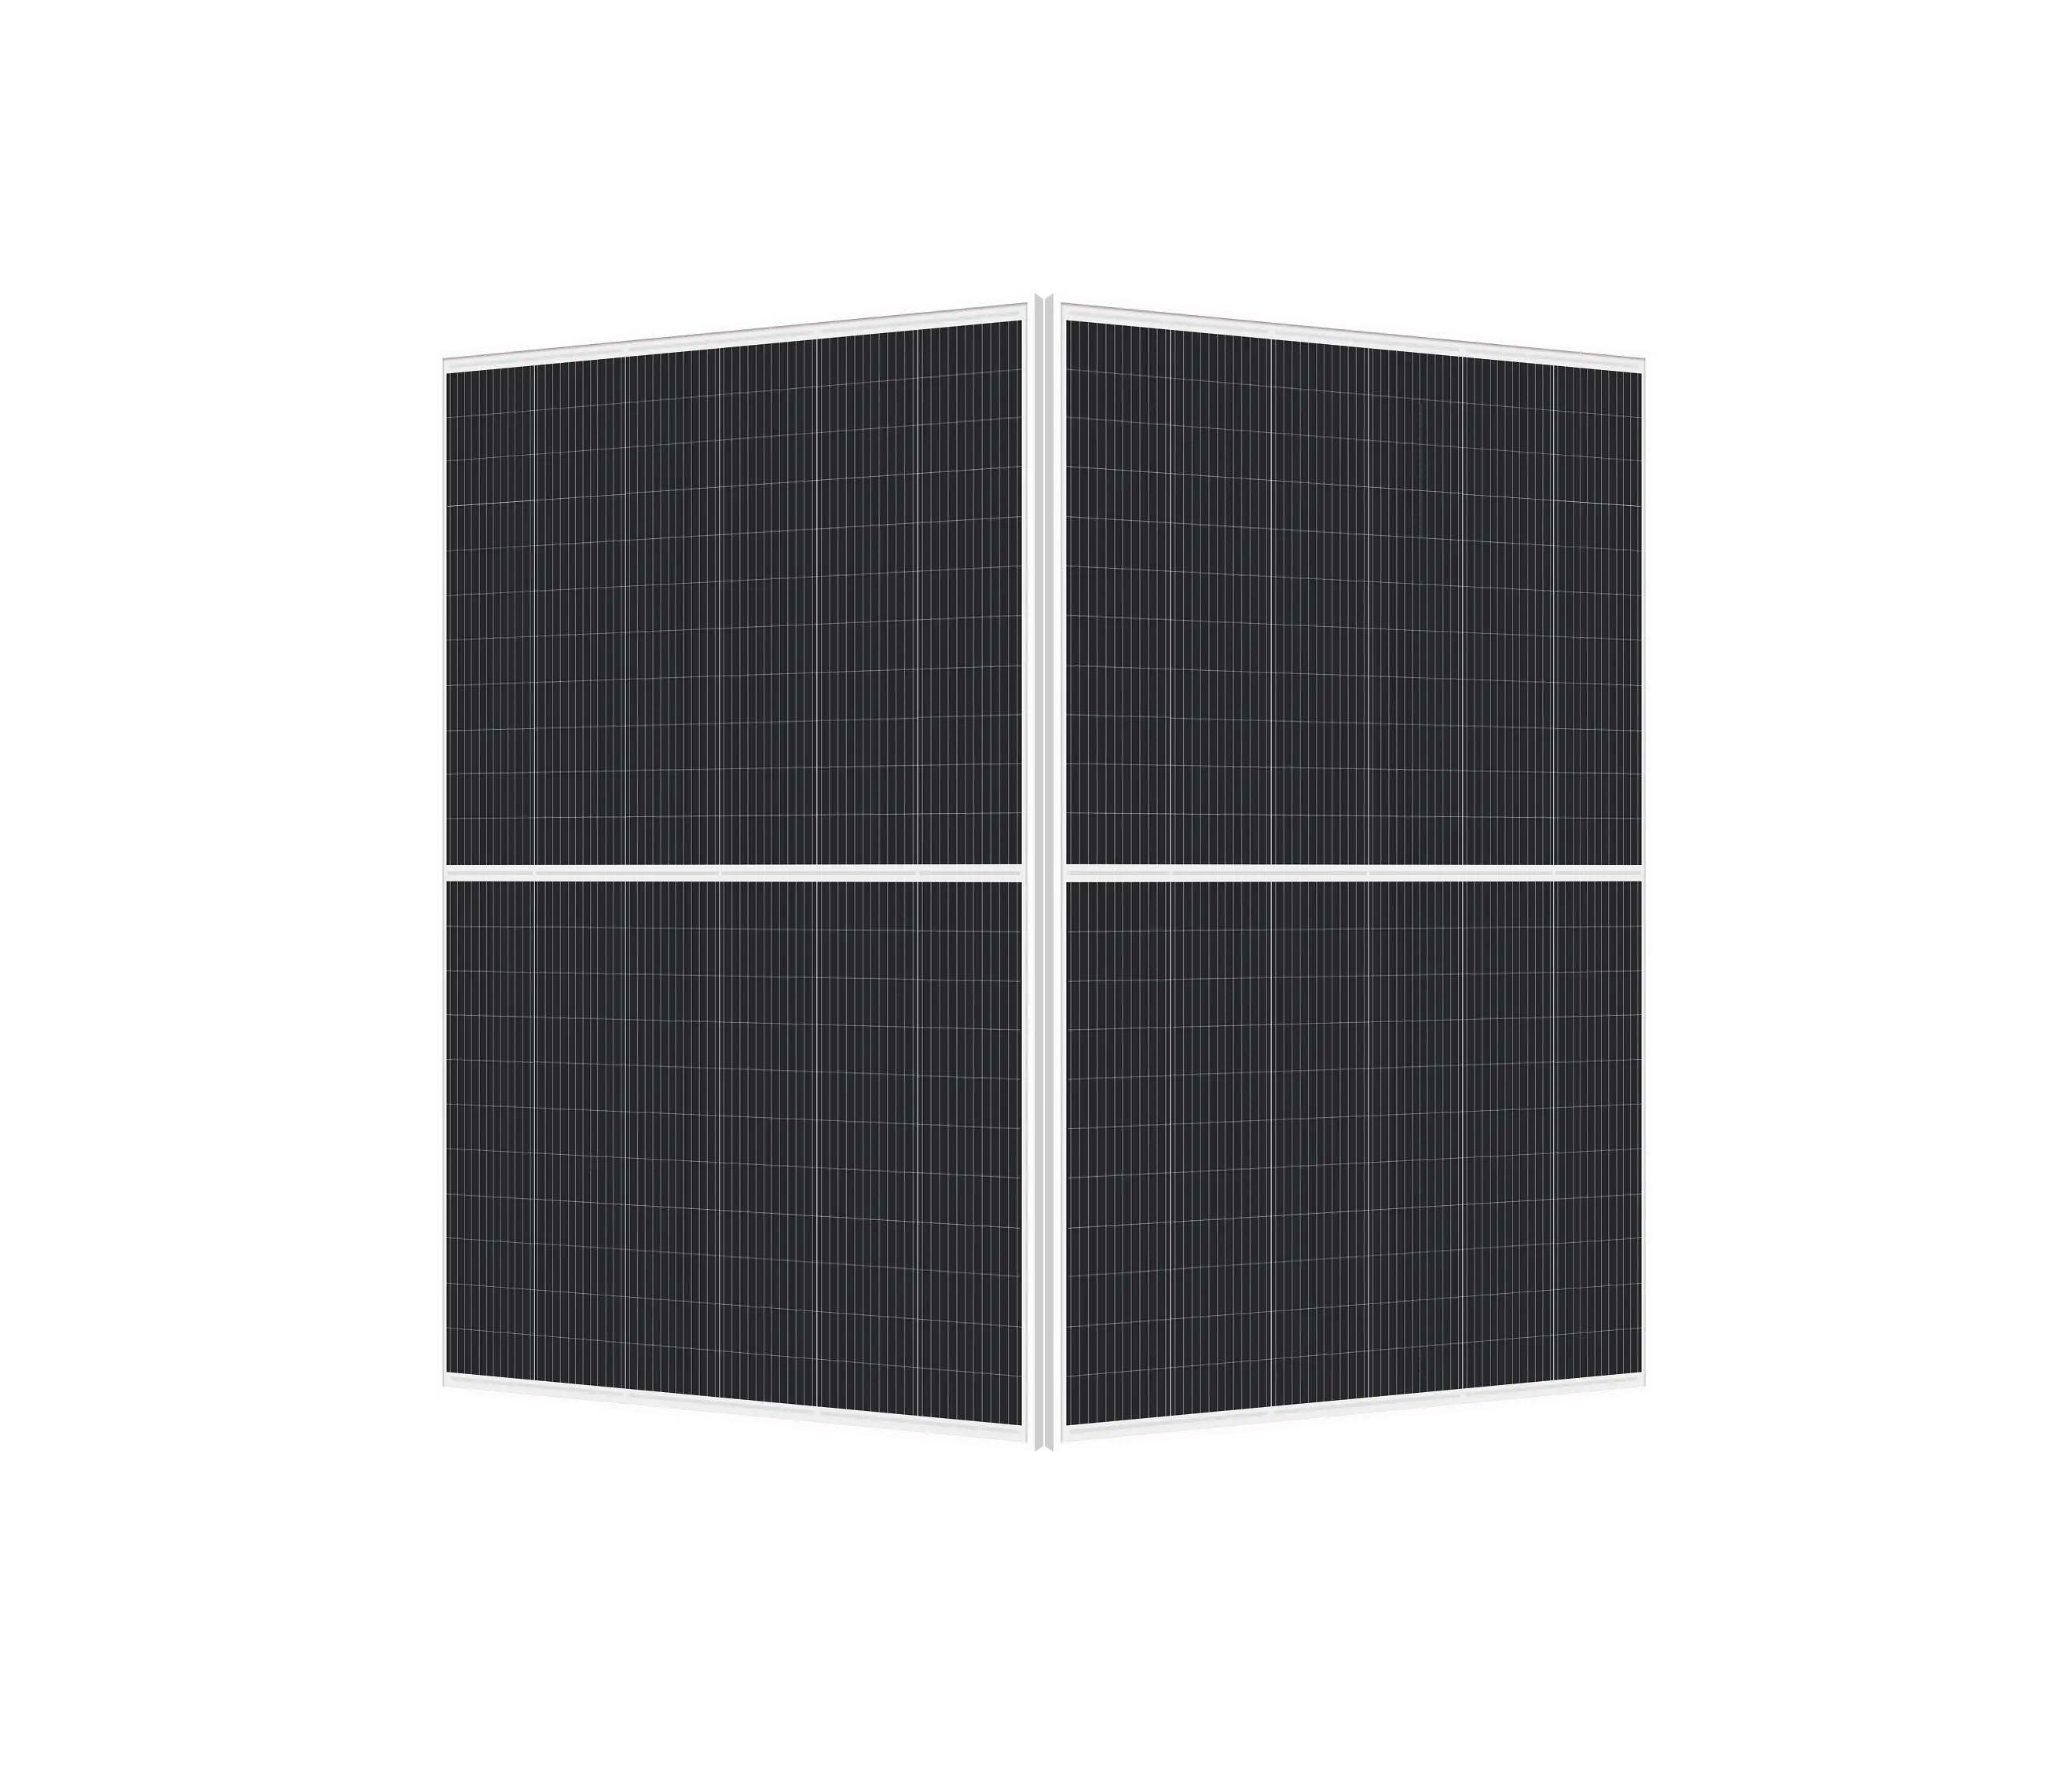 Mono G12 132cells 650-670w solar panel